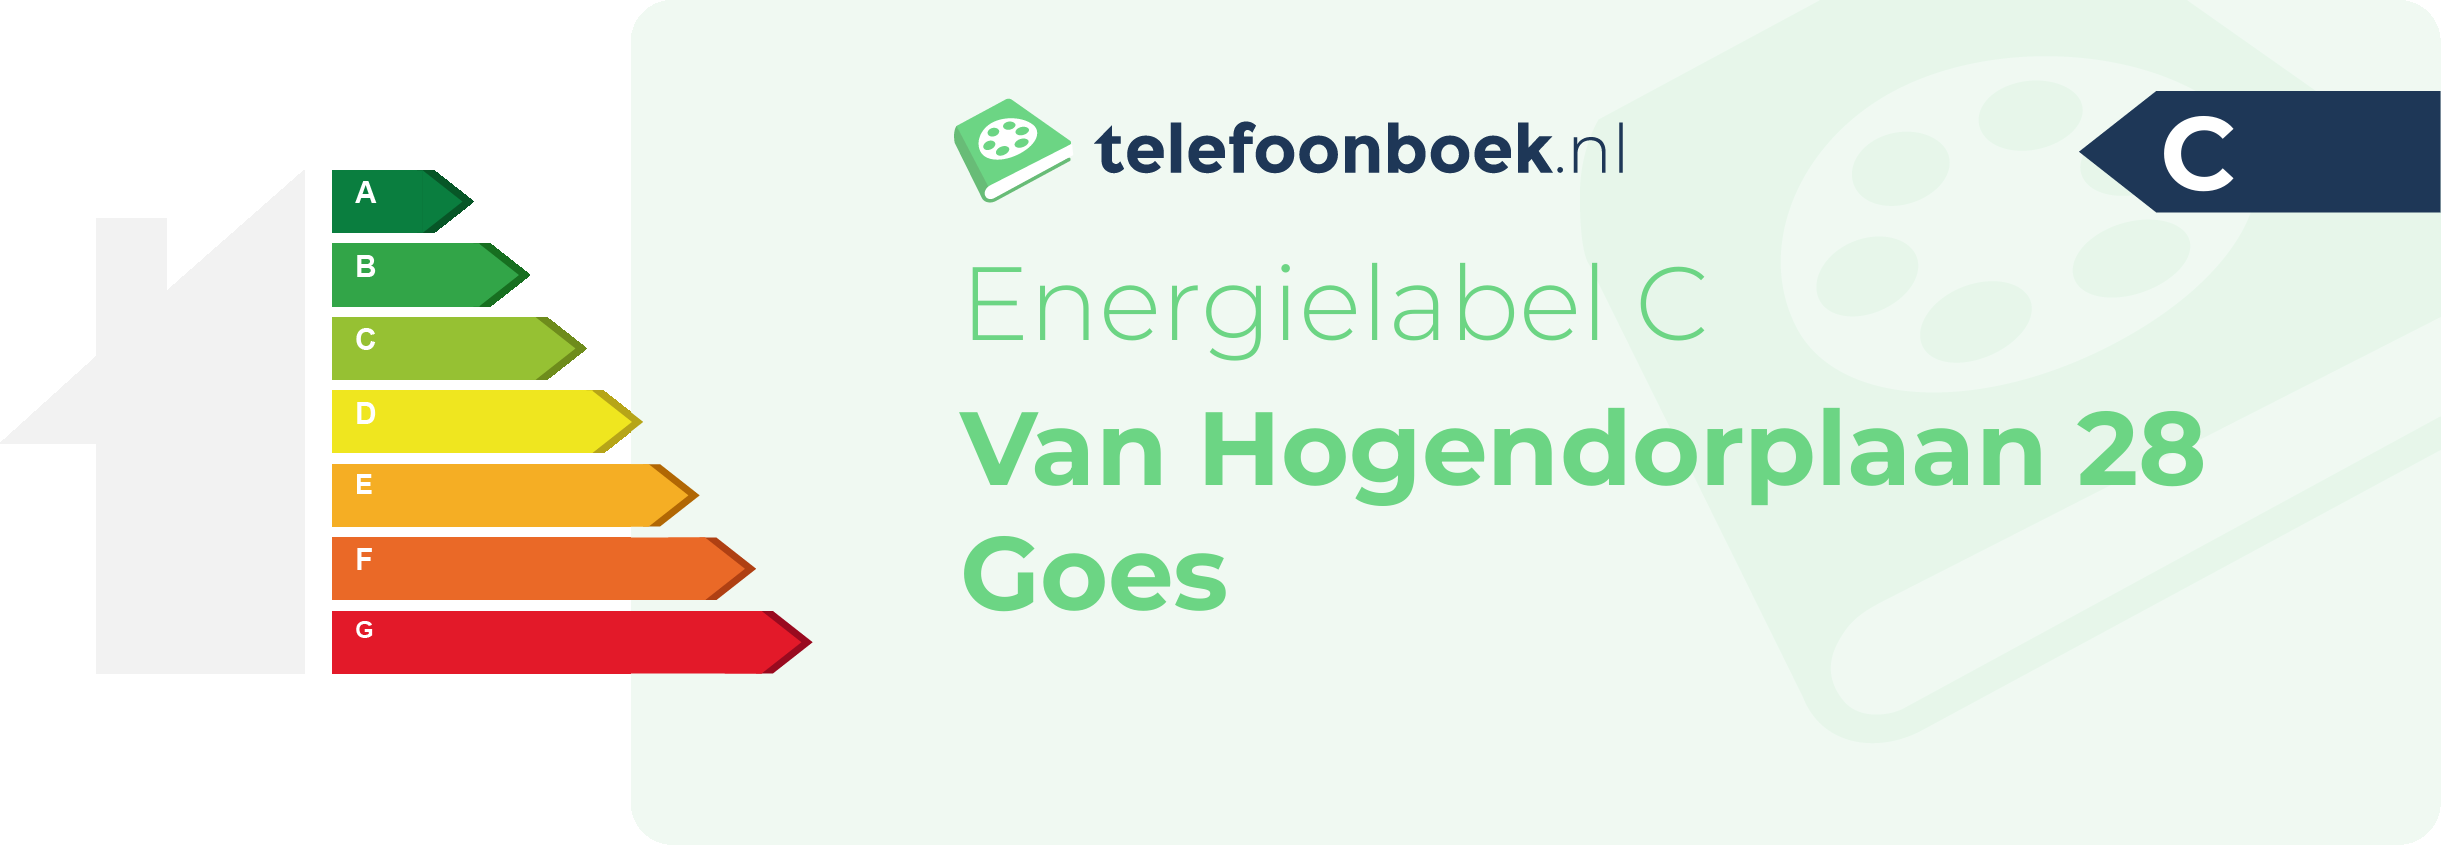 Energielabel Van Hogendorplaan 28 Goes